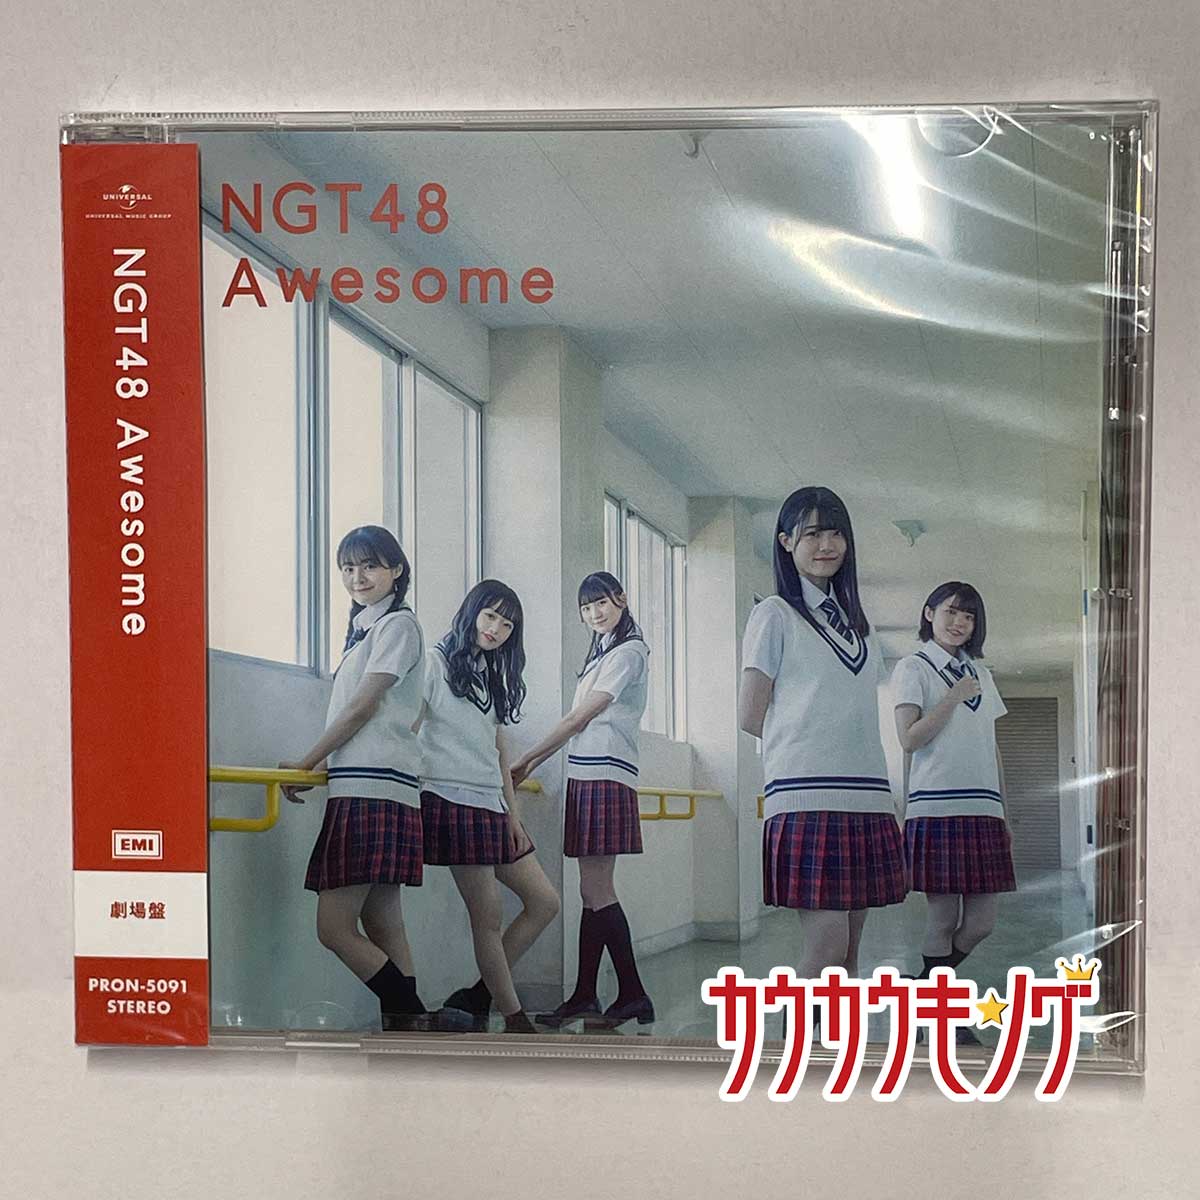 【中古・未開封】 NGT48 6th Single「Awesome」 劇場盤CD PRON-5091